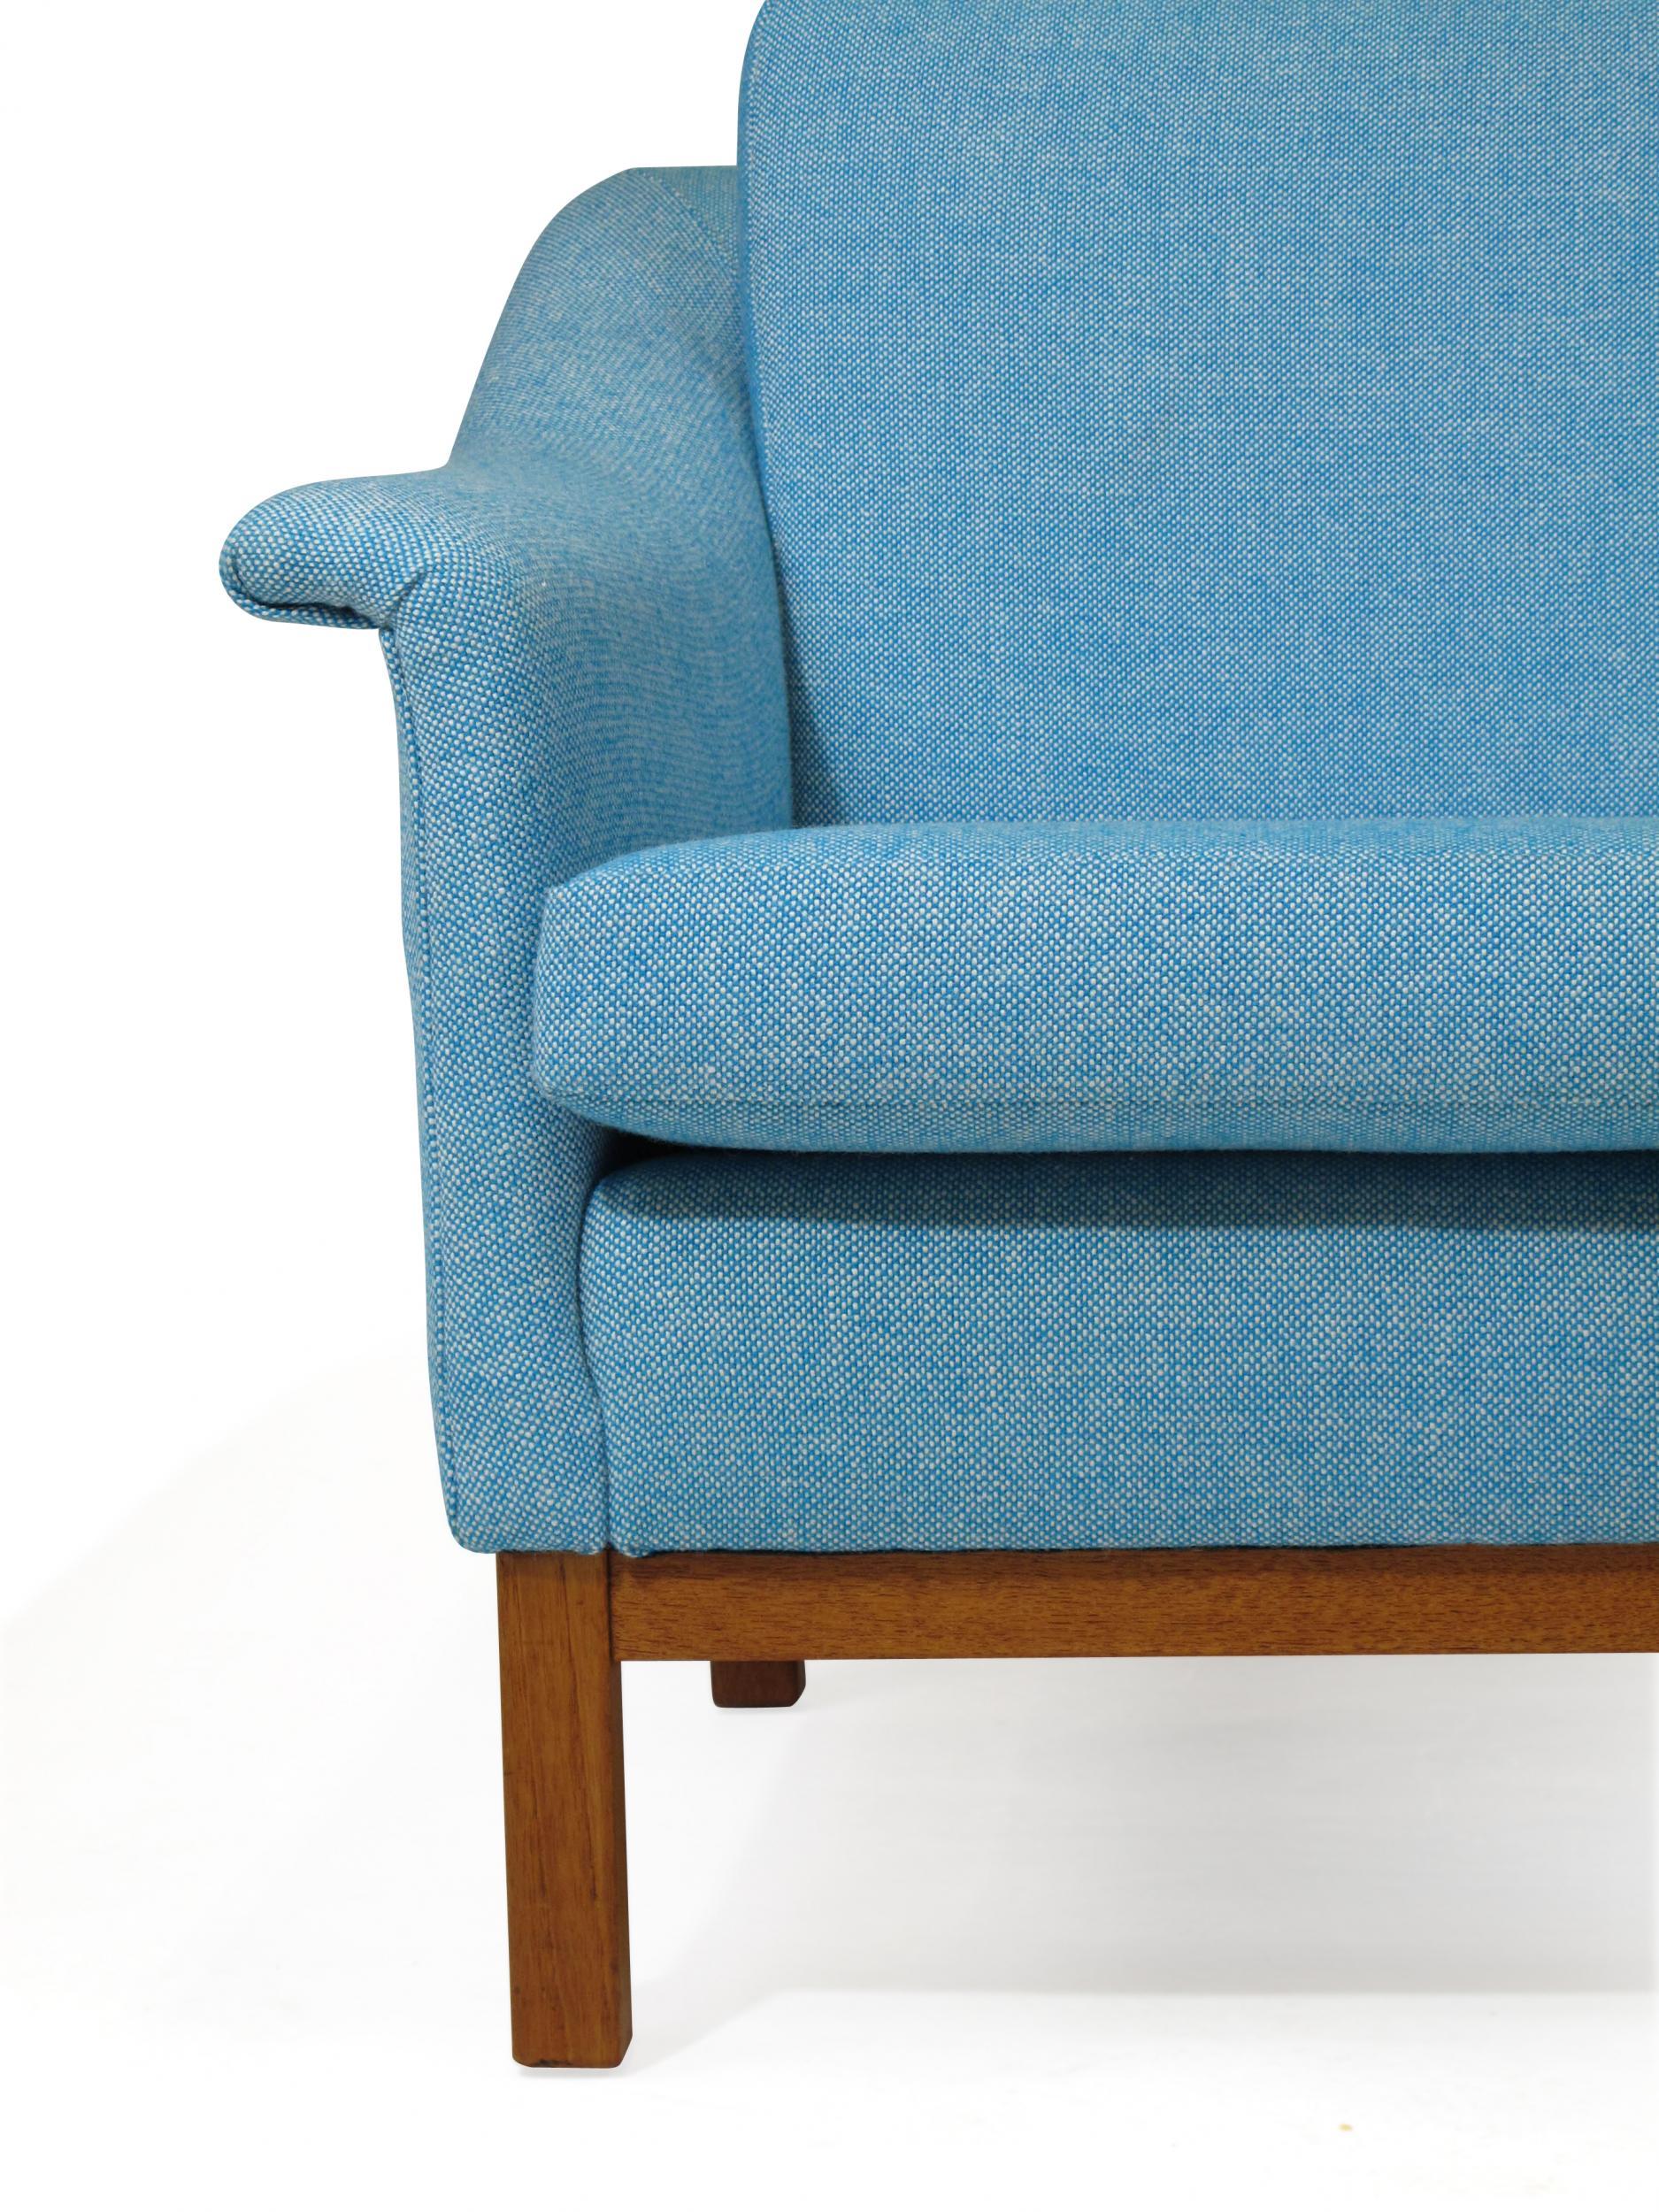 Scandinavian Modern Folke Ohlsson Mid-Century Danish Lounge Chair For Sale